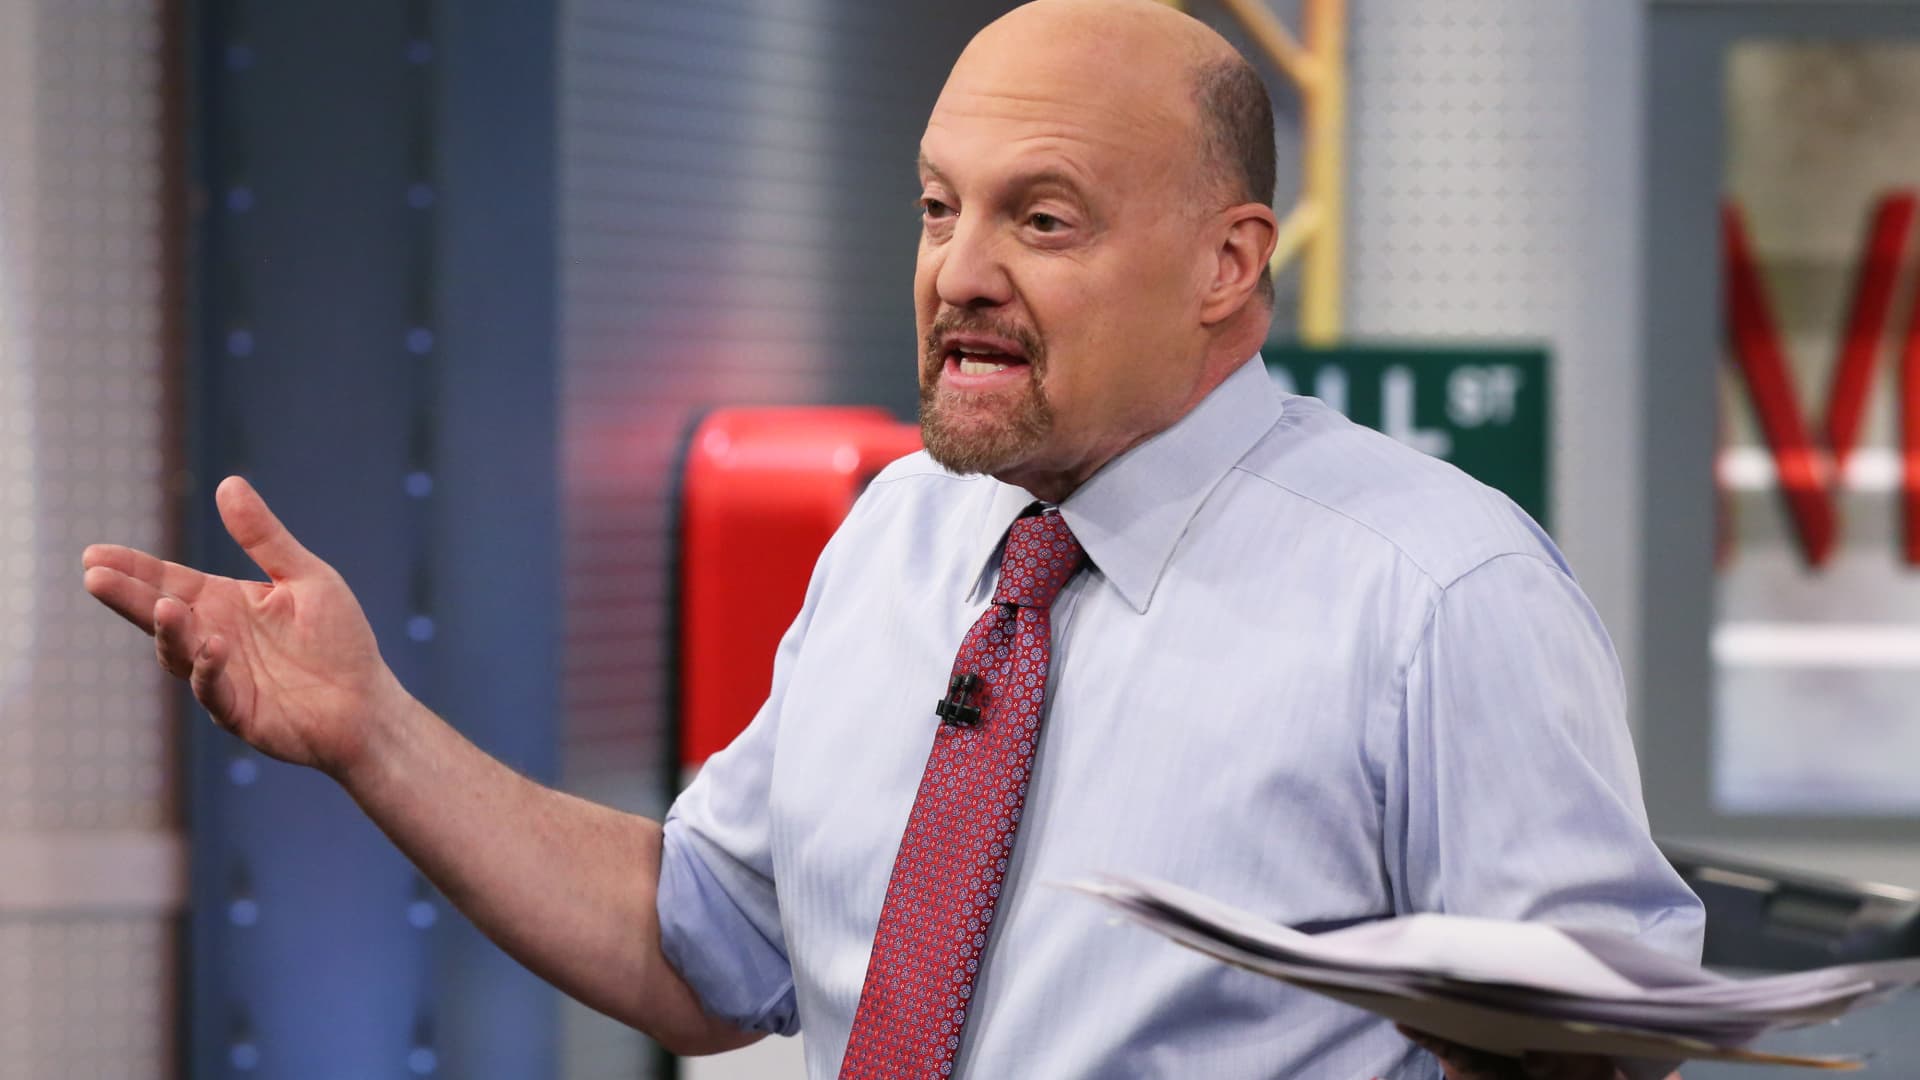 Jim Cramer says these 7 Covid-era winning stocks have staying power